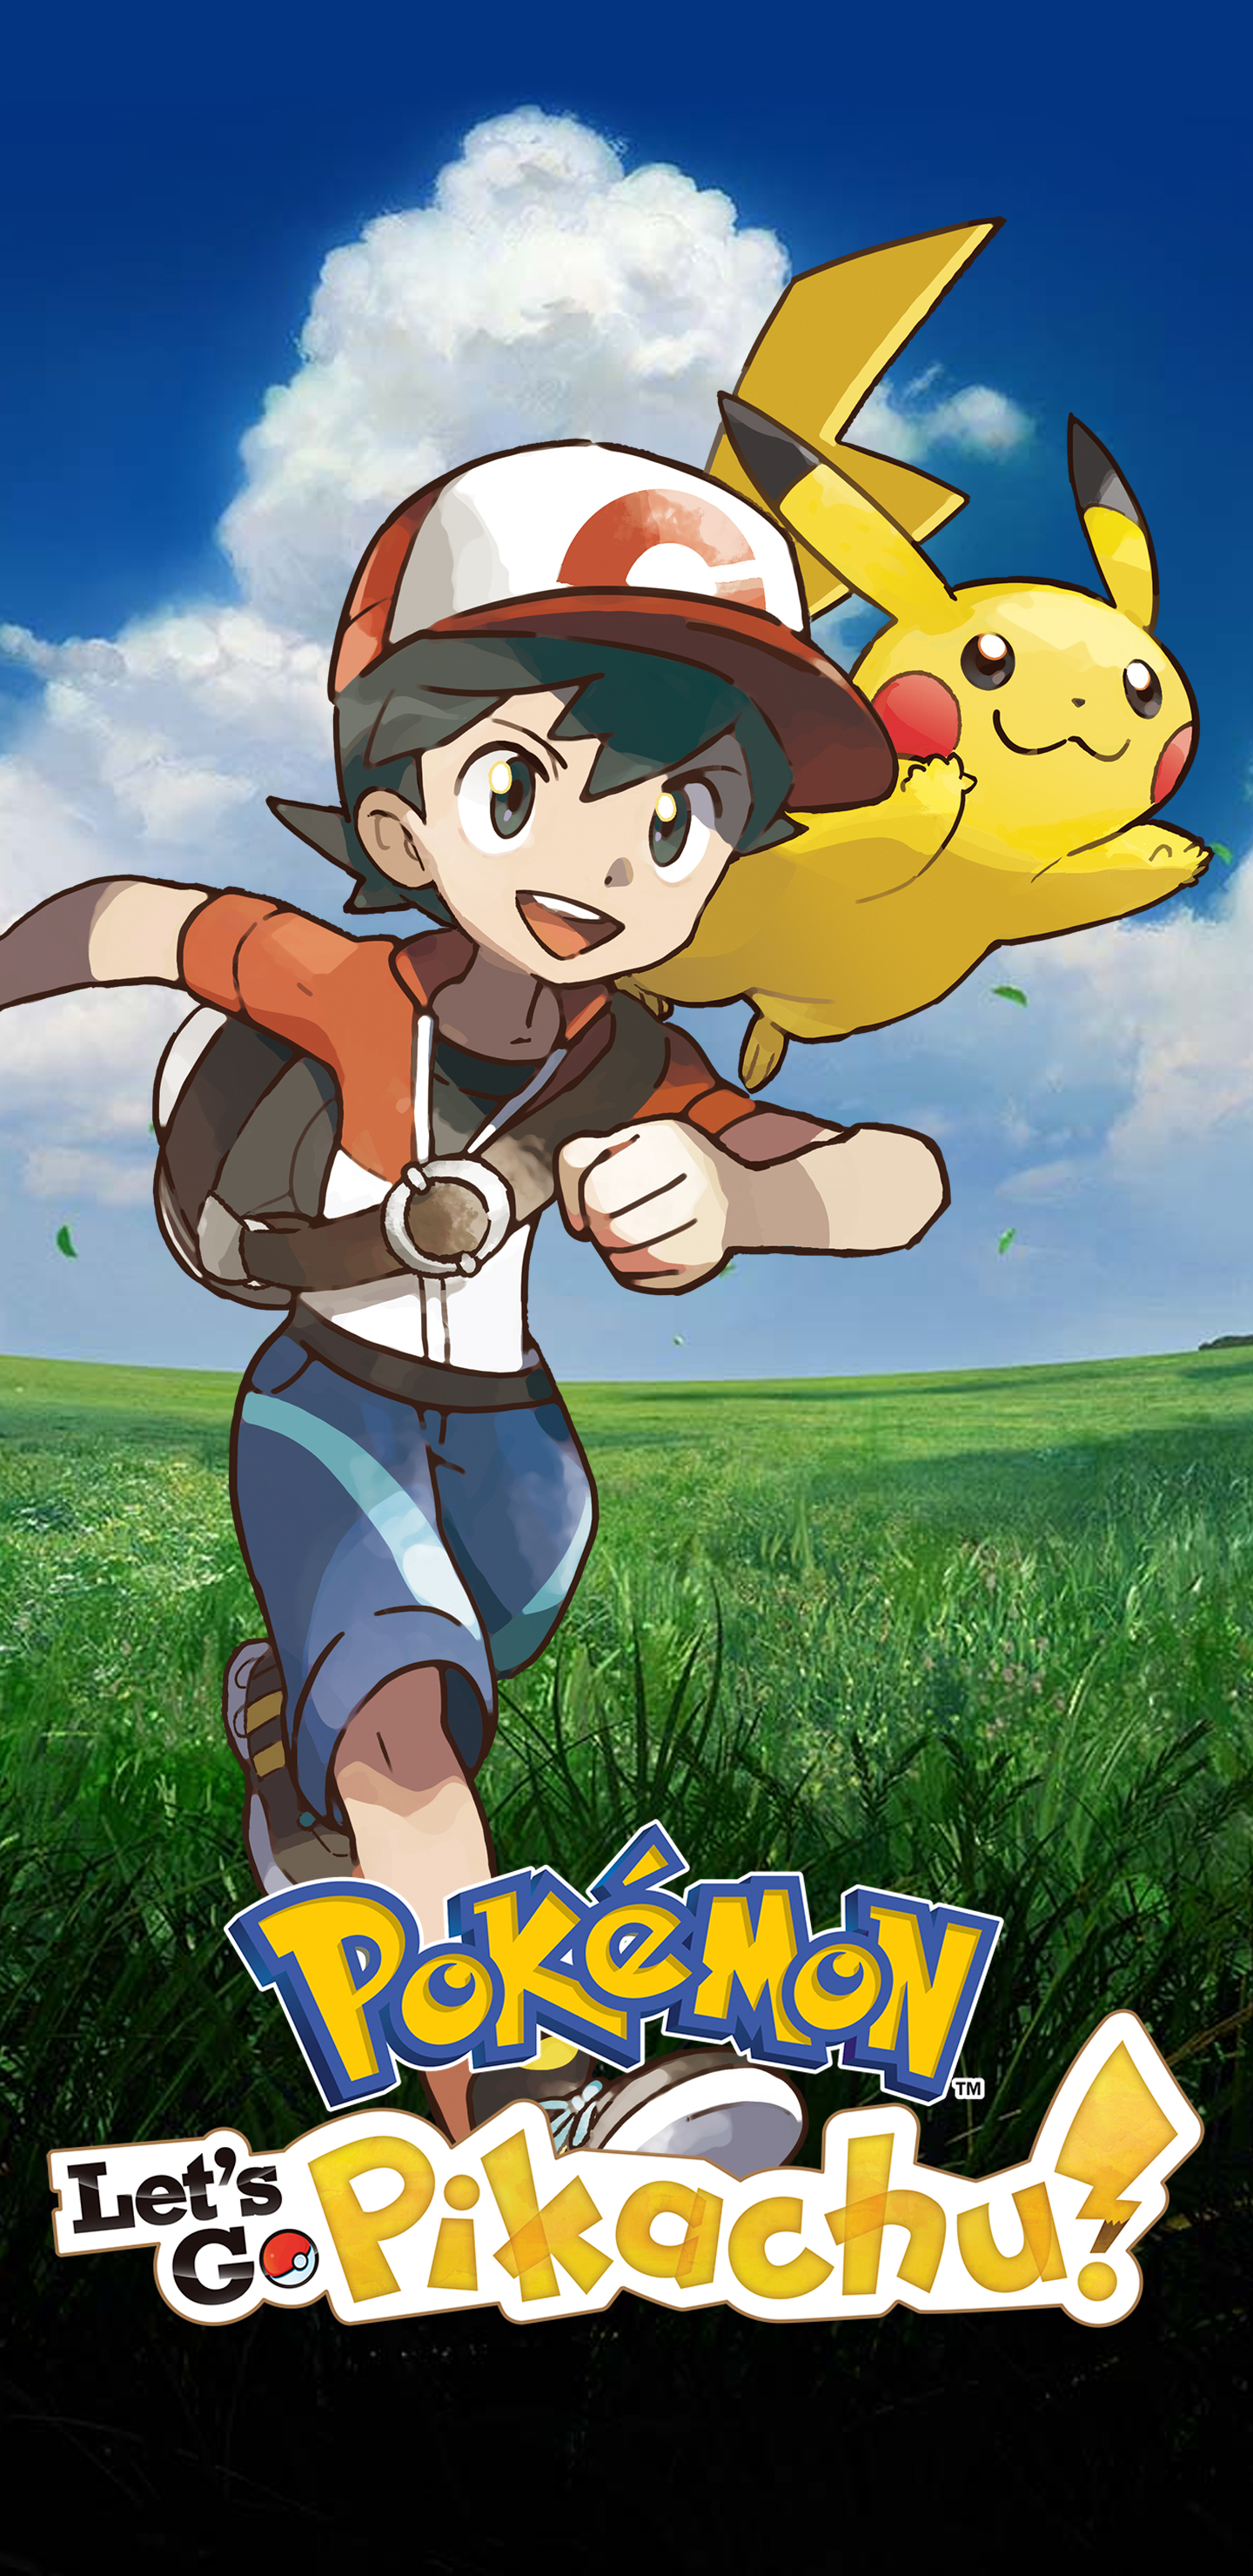 Pikachu Game Mobile Wallpaper